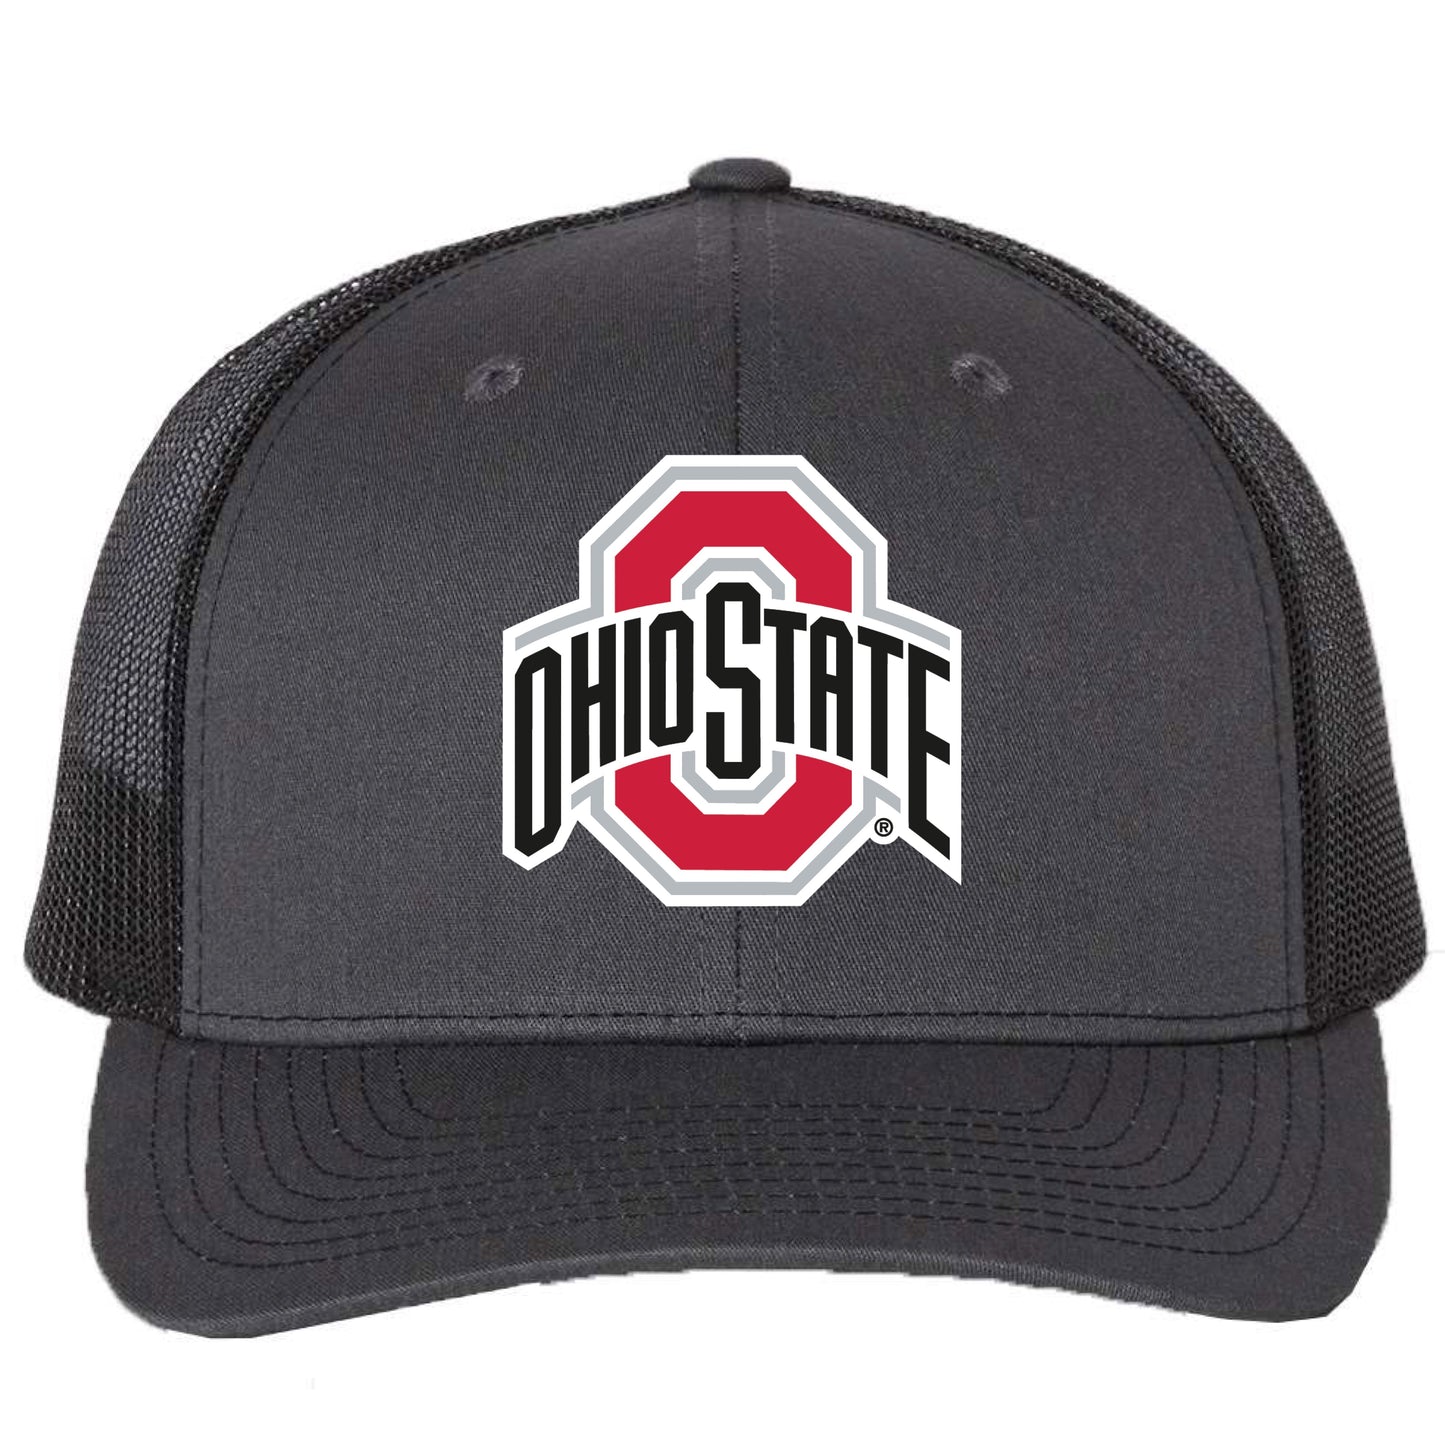 Ohio State Buckeyes 3D YP Snapback Trucker Hat- Charcoal - Ten Gallon Hat Co.